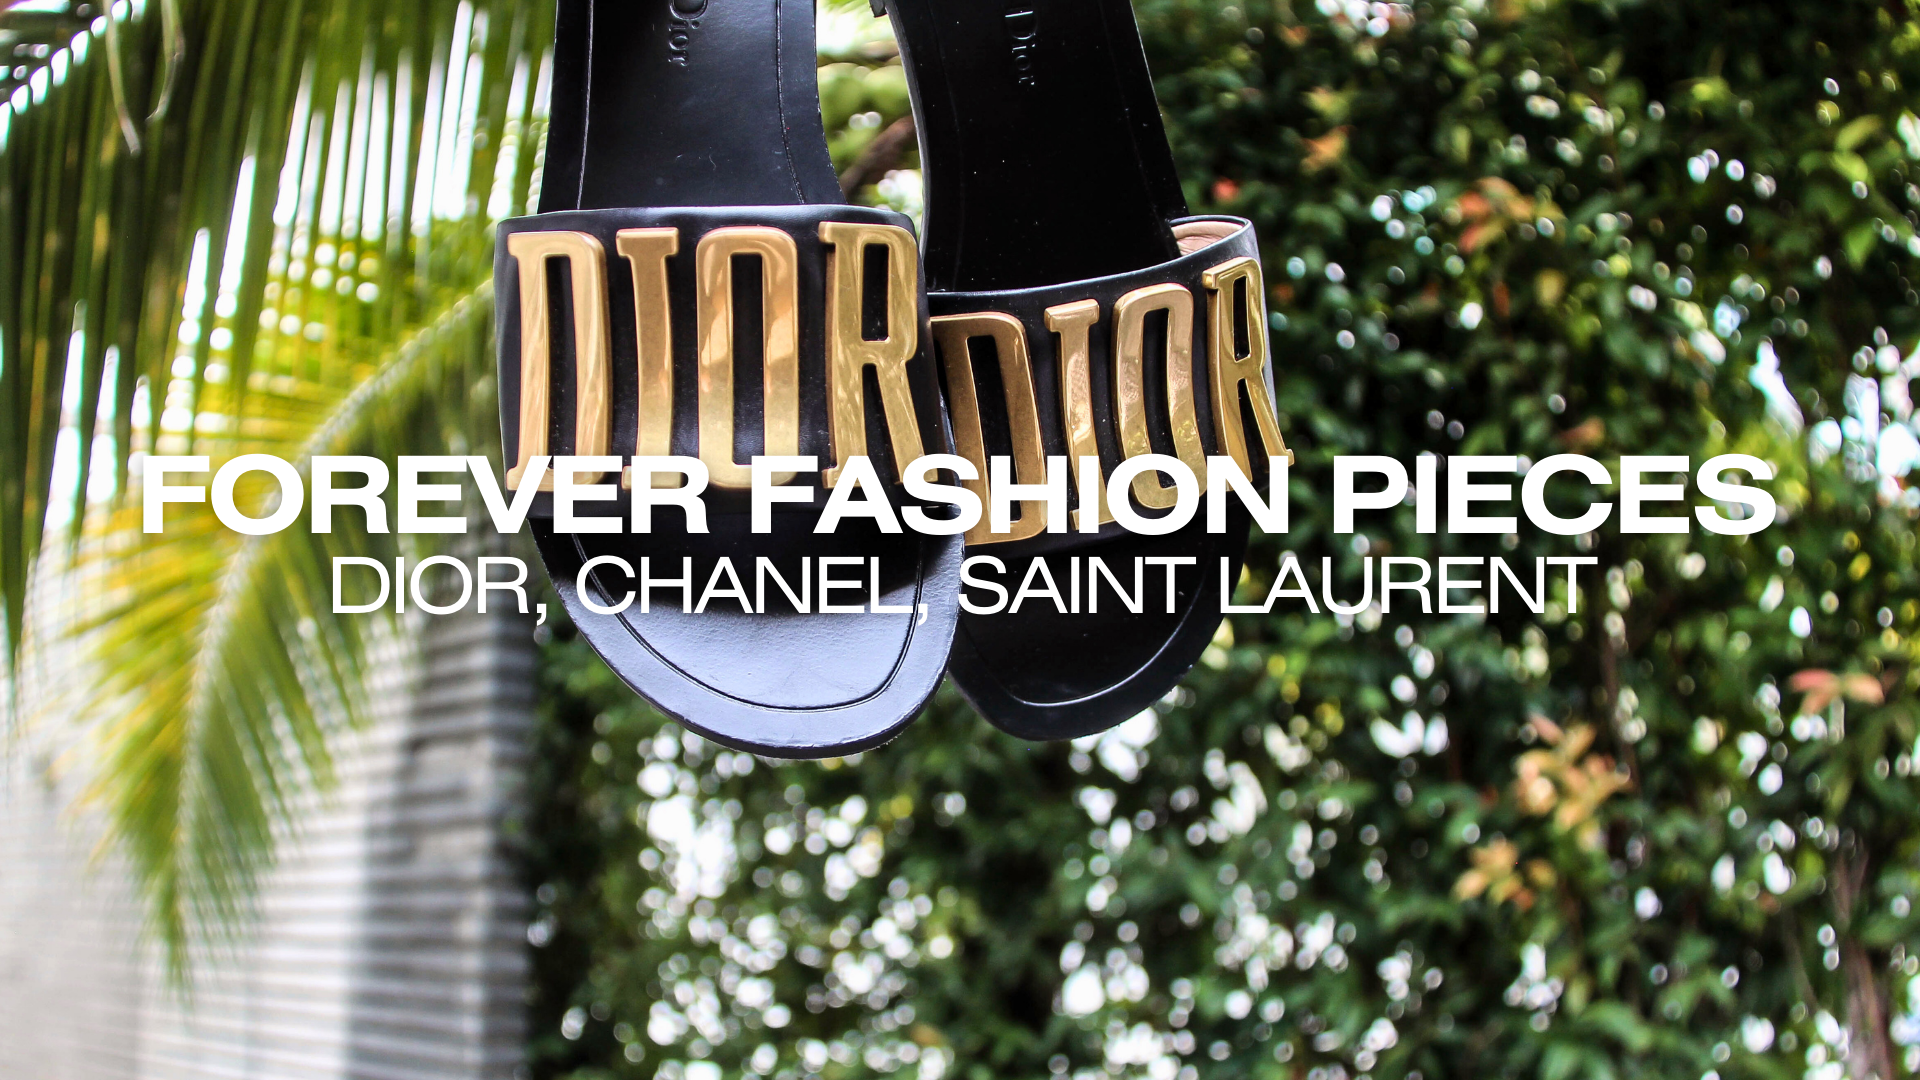 Louis Vuitton Batignolles Horizontal - The Palm Beach Trunk Designer Resale  and Luxury Consignment